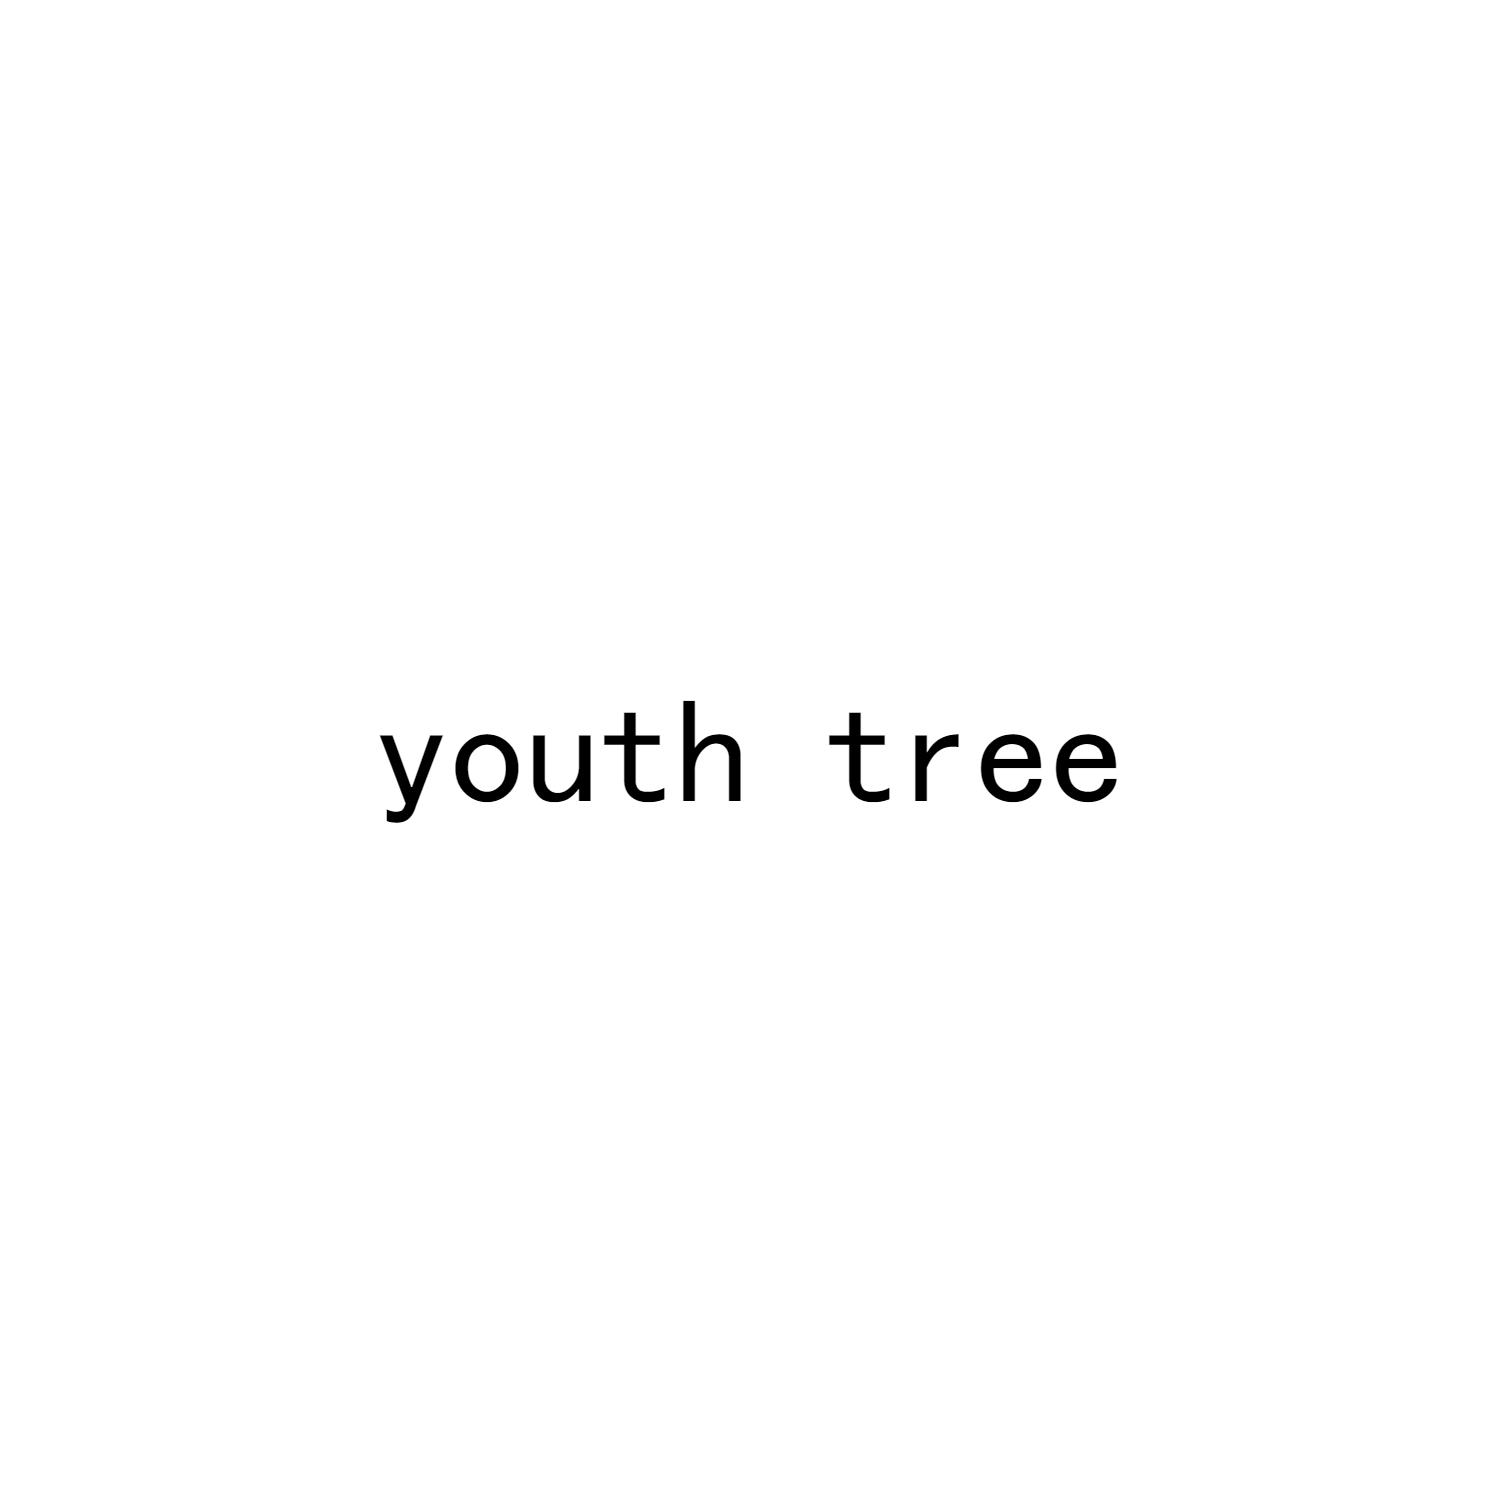 41类-教育文娱YOUTH TREE商标转让